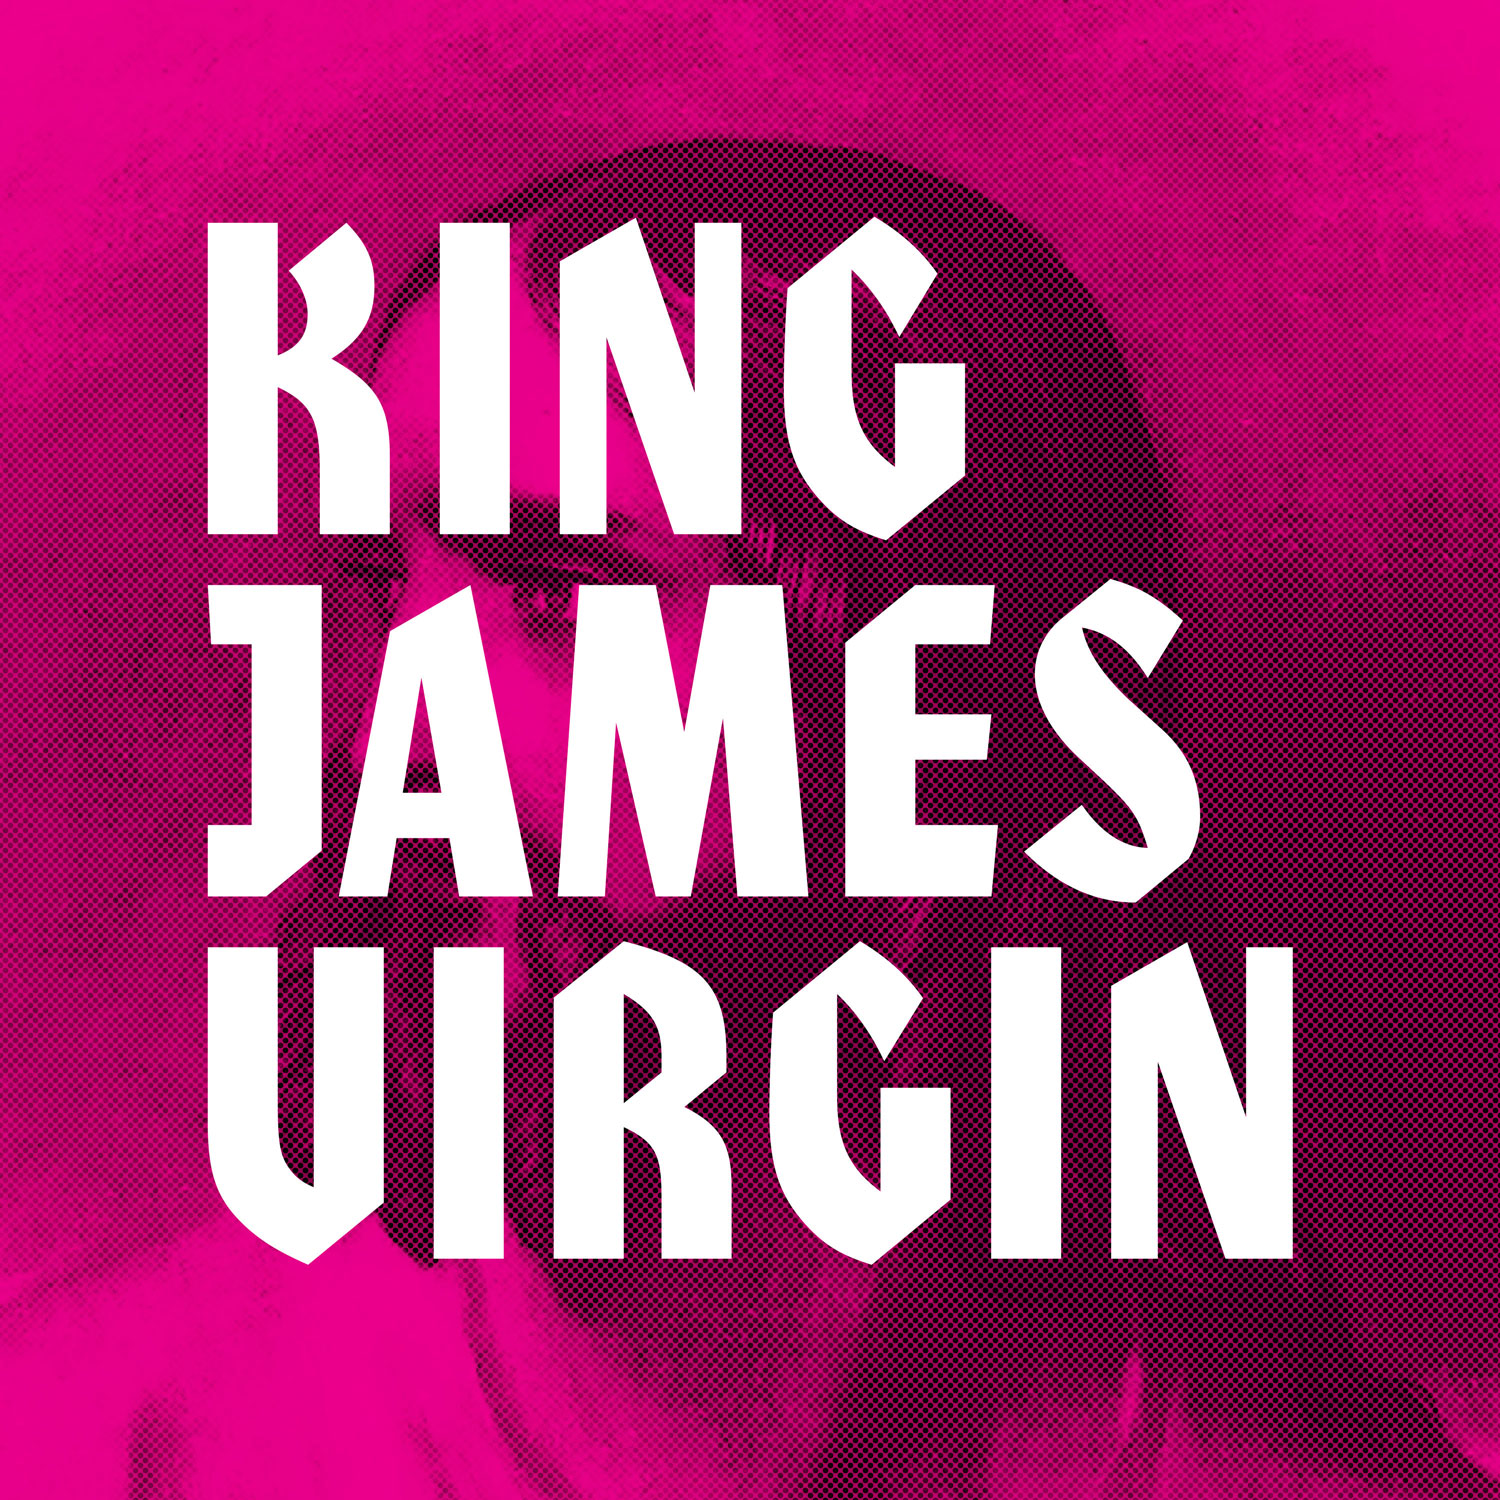 The King James Virgin